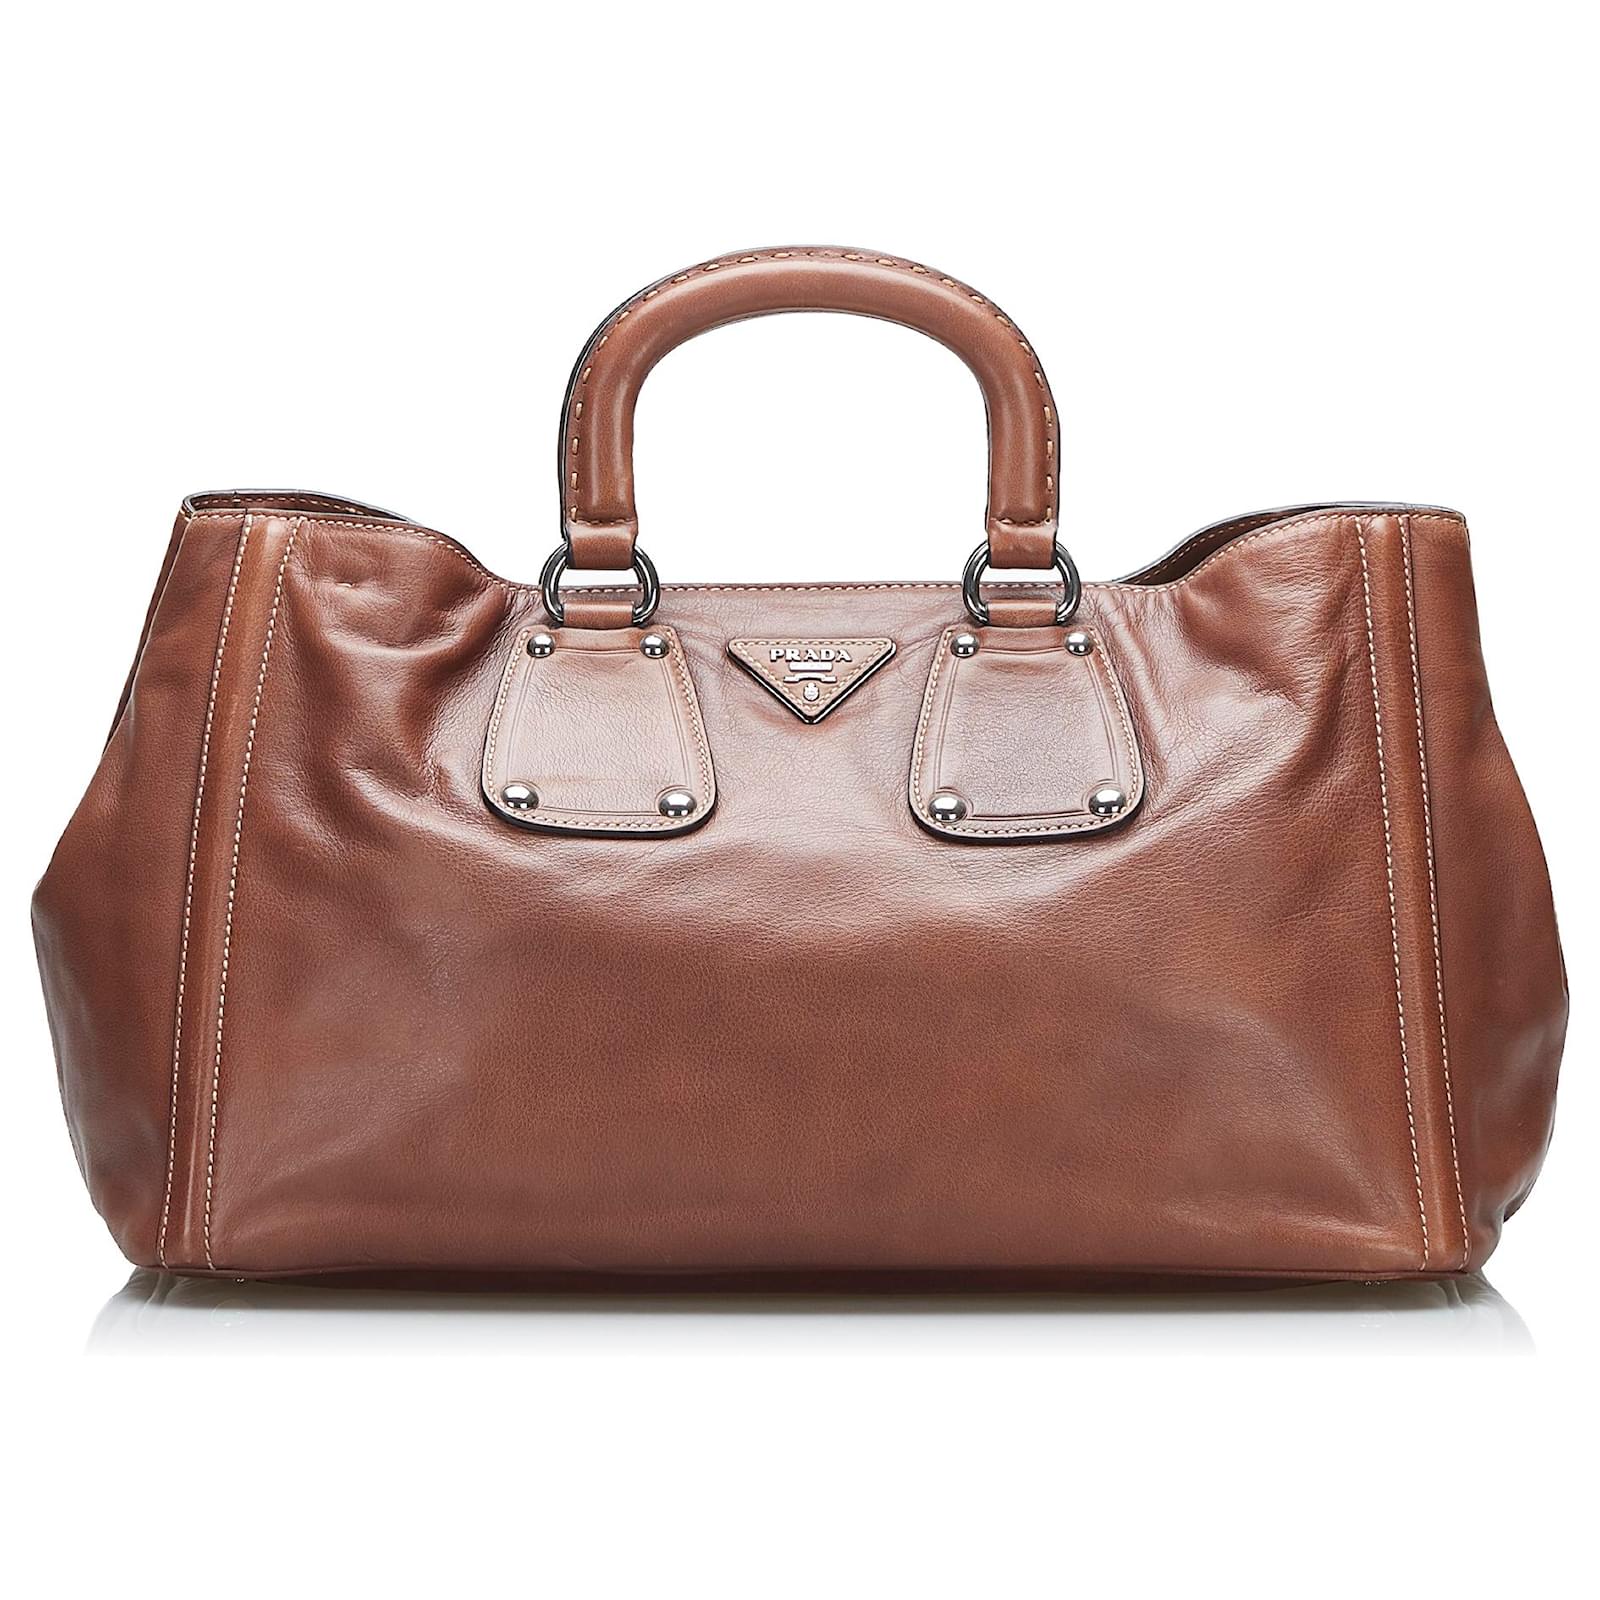 Prada Patent Calf Leather Handbag